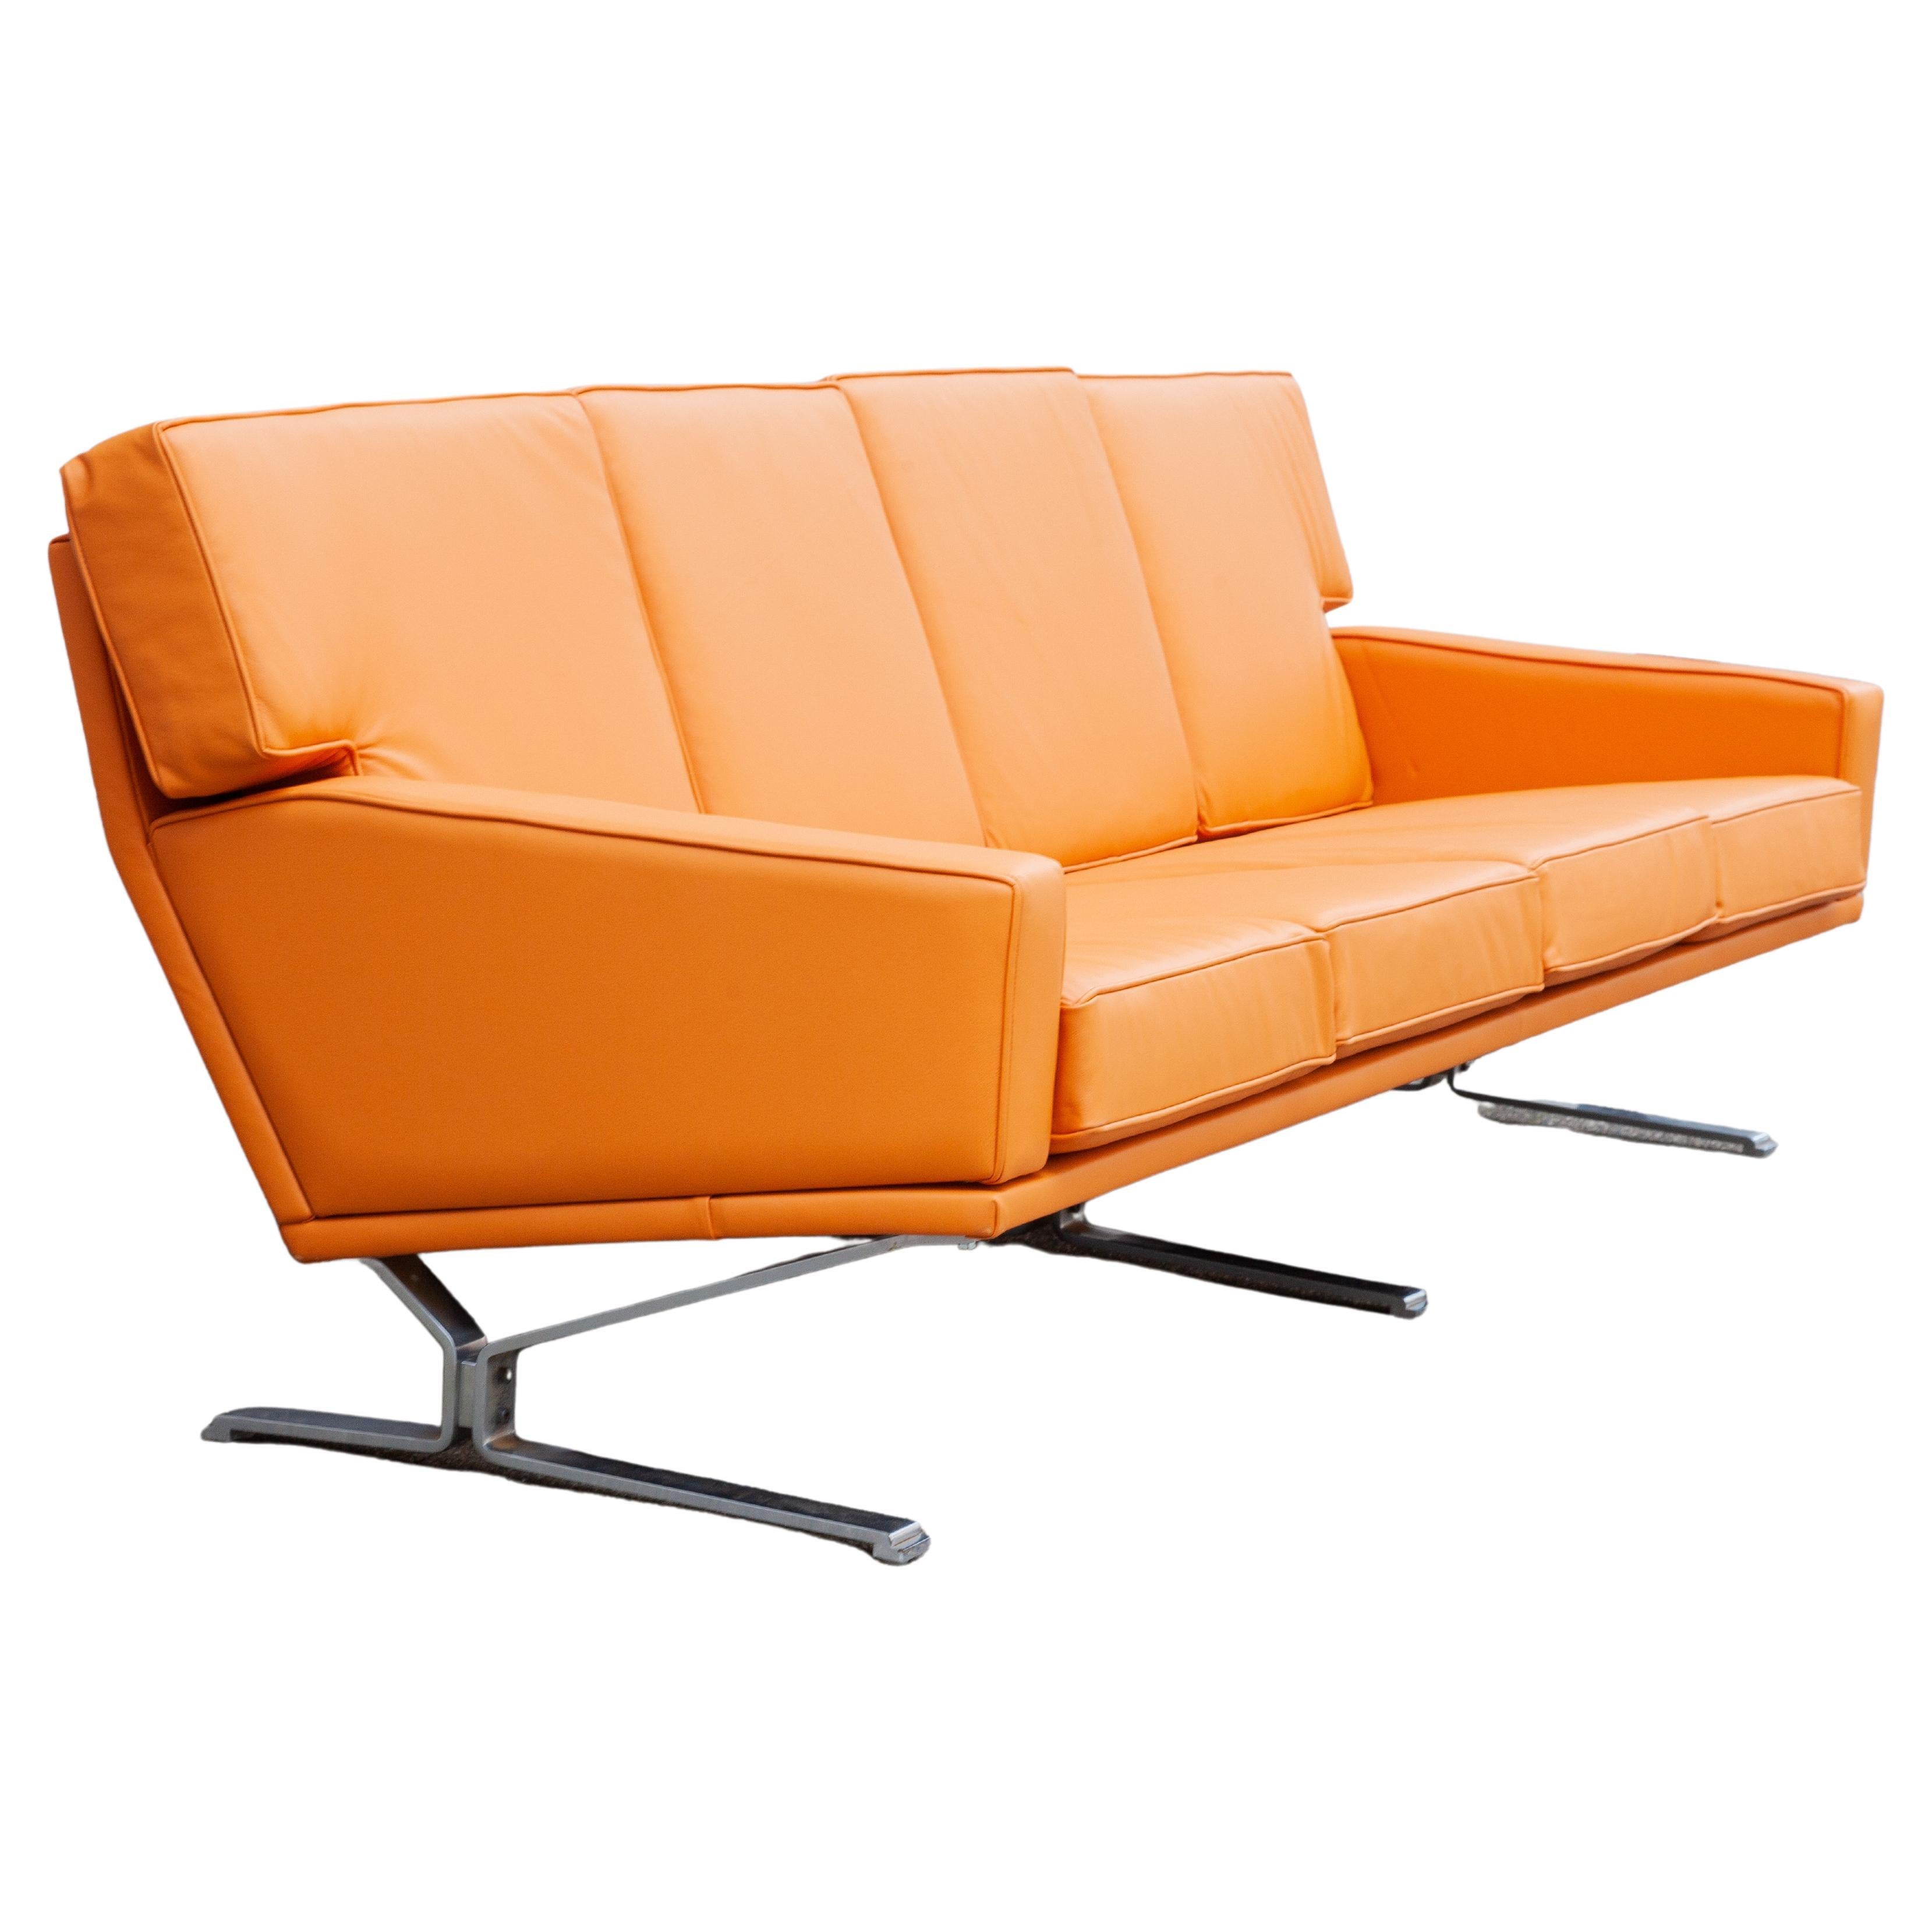 Midcentury Modern Cognac Color Four-Seat Sofa, Living Roomset, 1960s, Denmark